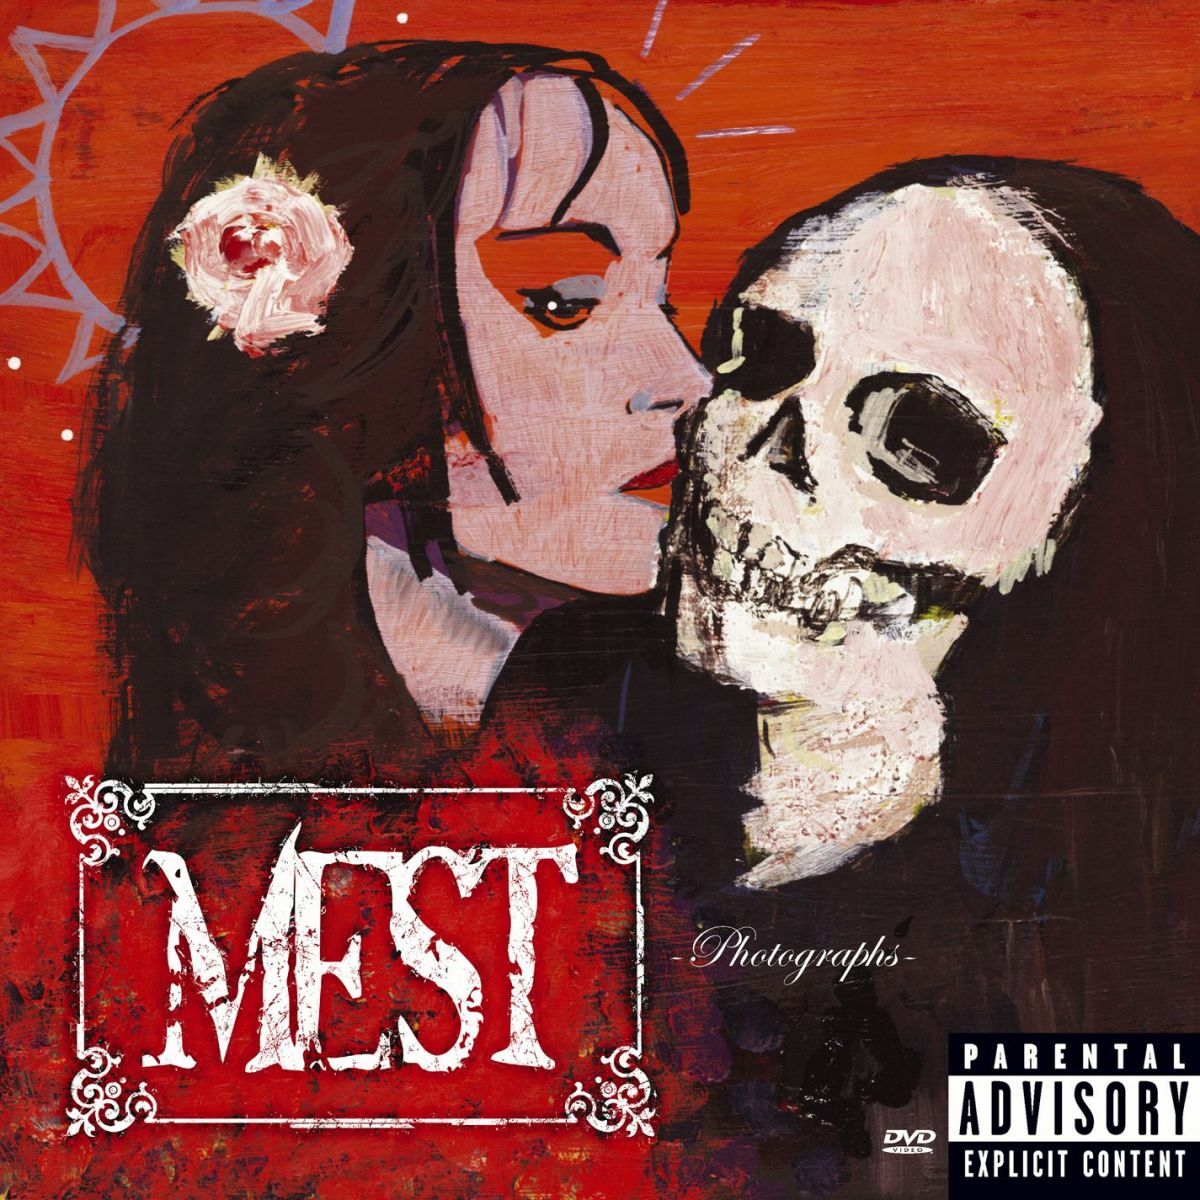 Mest - Photographs (U.S. Release CD + DVD): lyrics and songs | Deezer